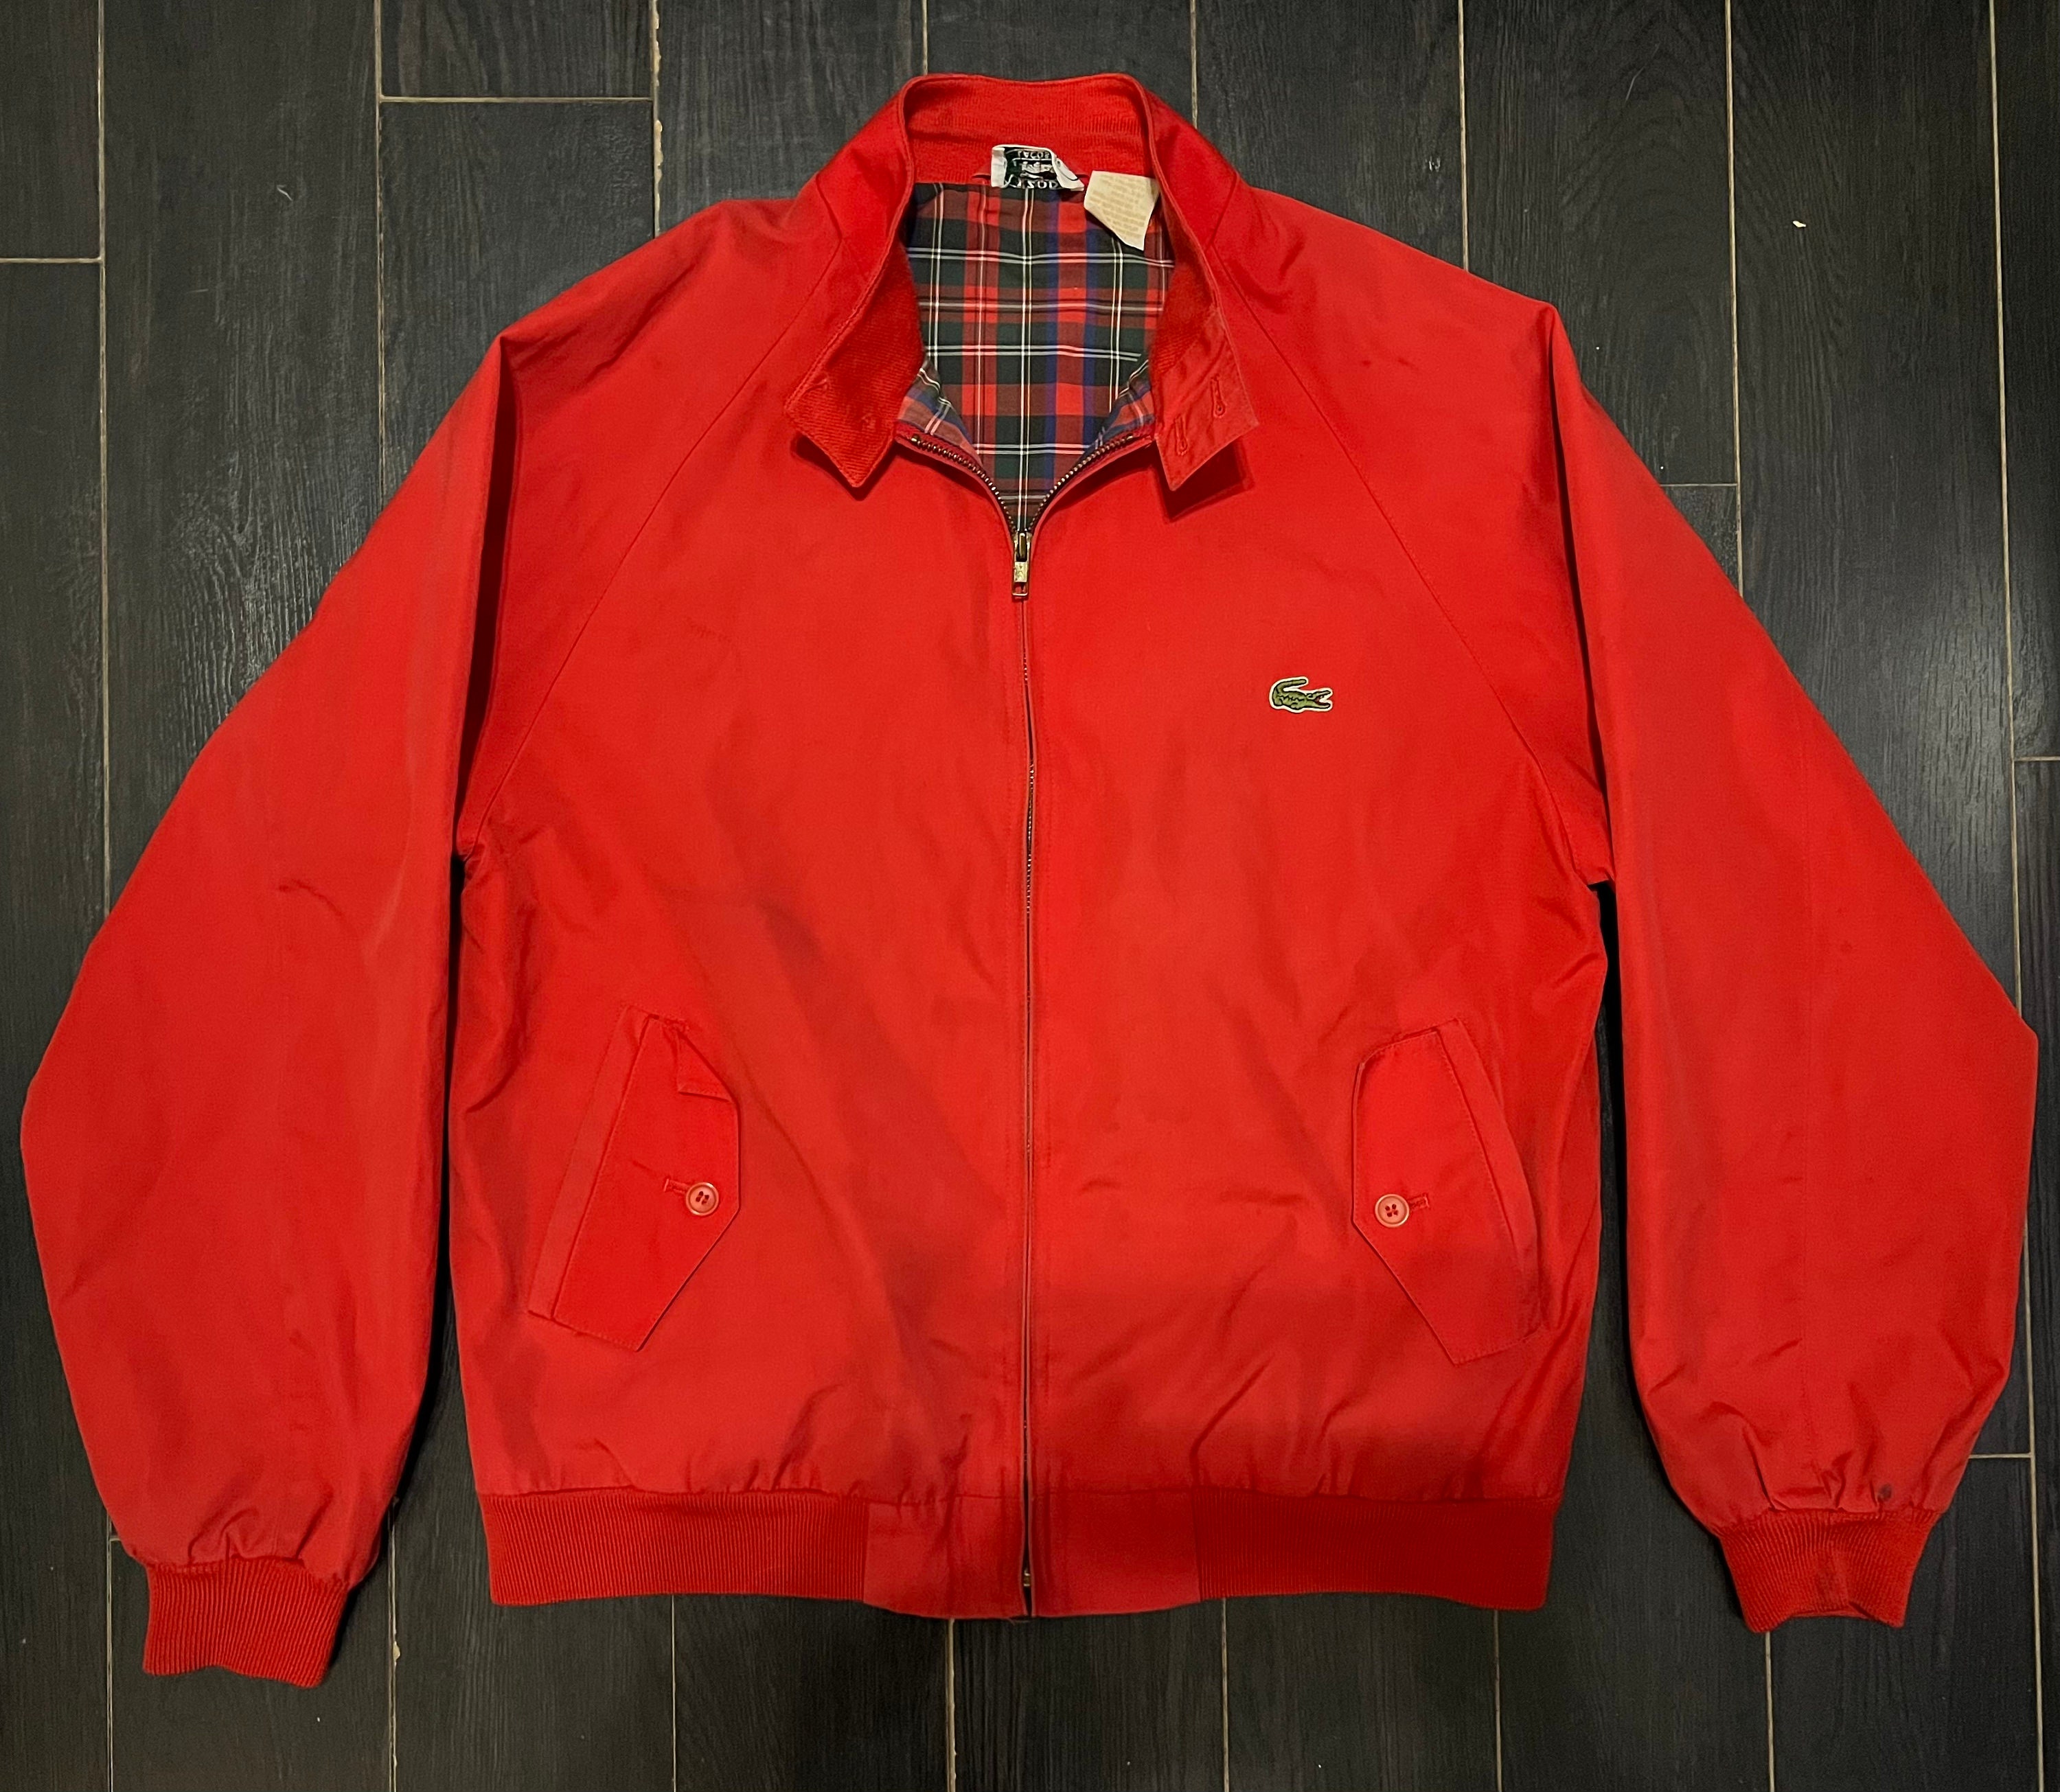 Lacoste Vintage Red Harrington Jacket With Plaid Lining Etsy